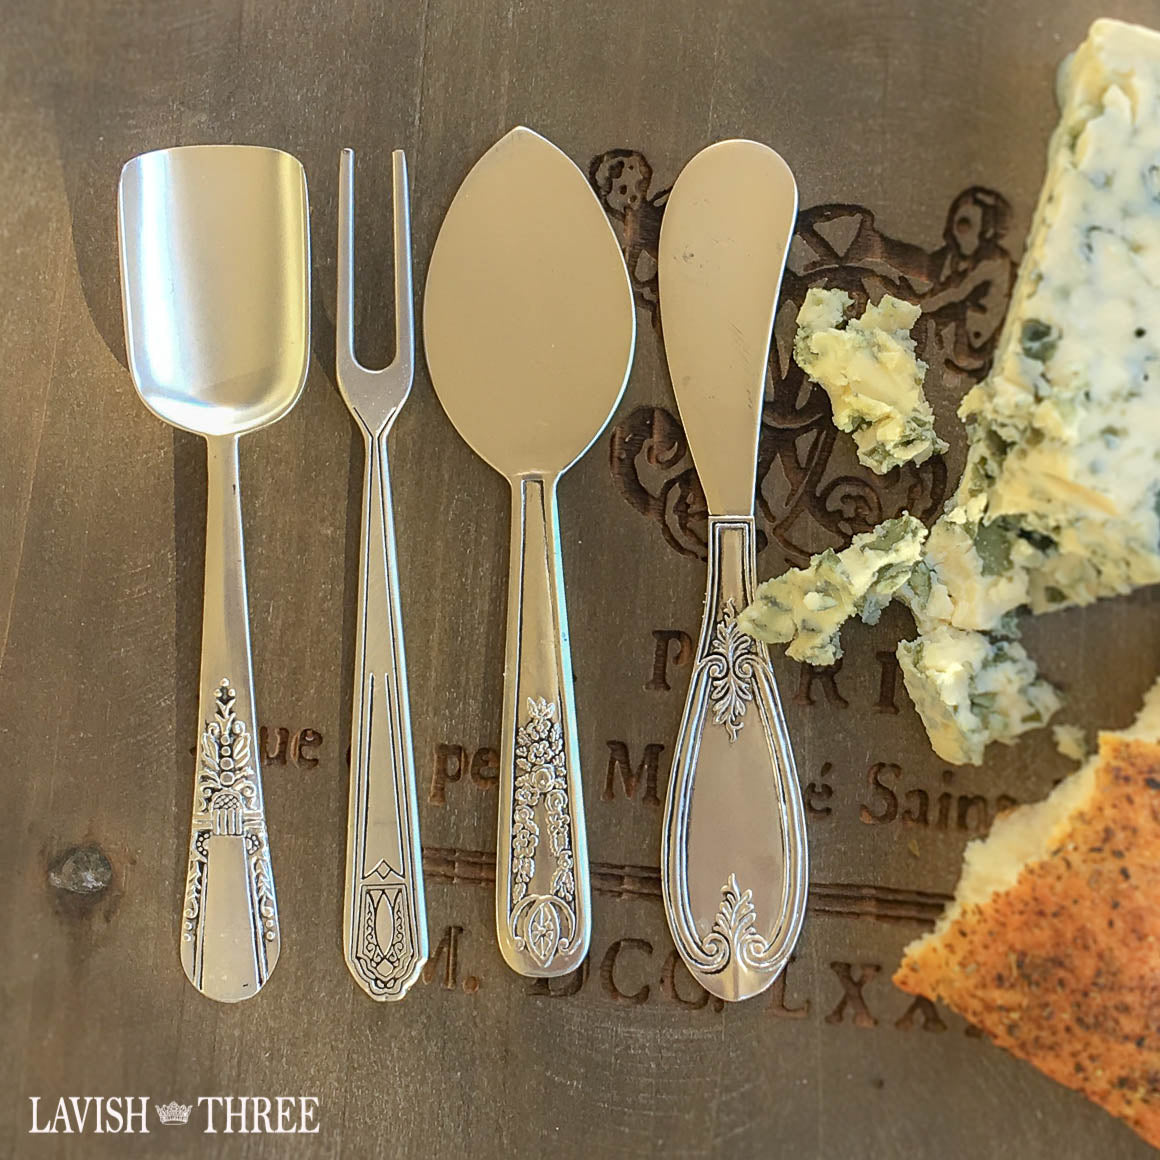 Cheese knives zinc alloy appetizer serving utensil set Lavish Three 3